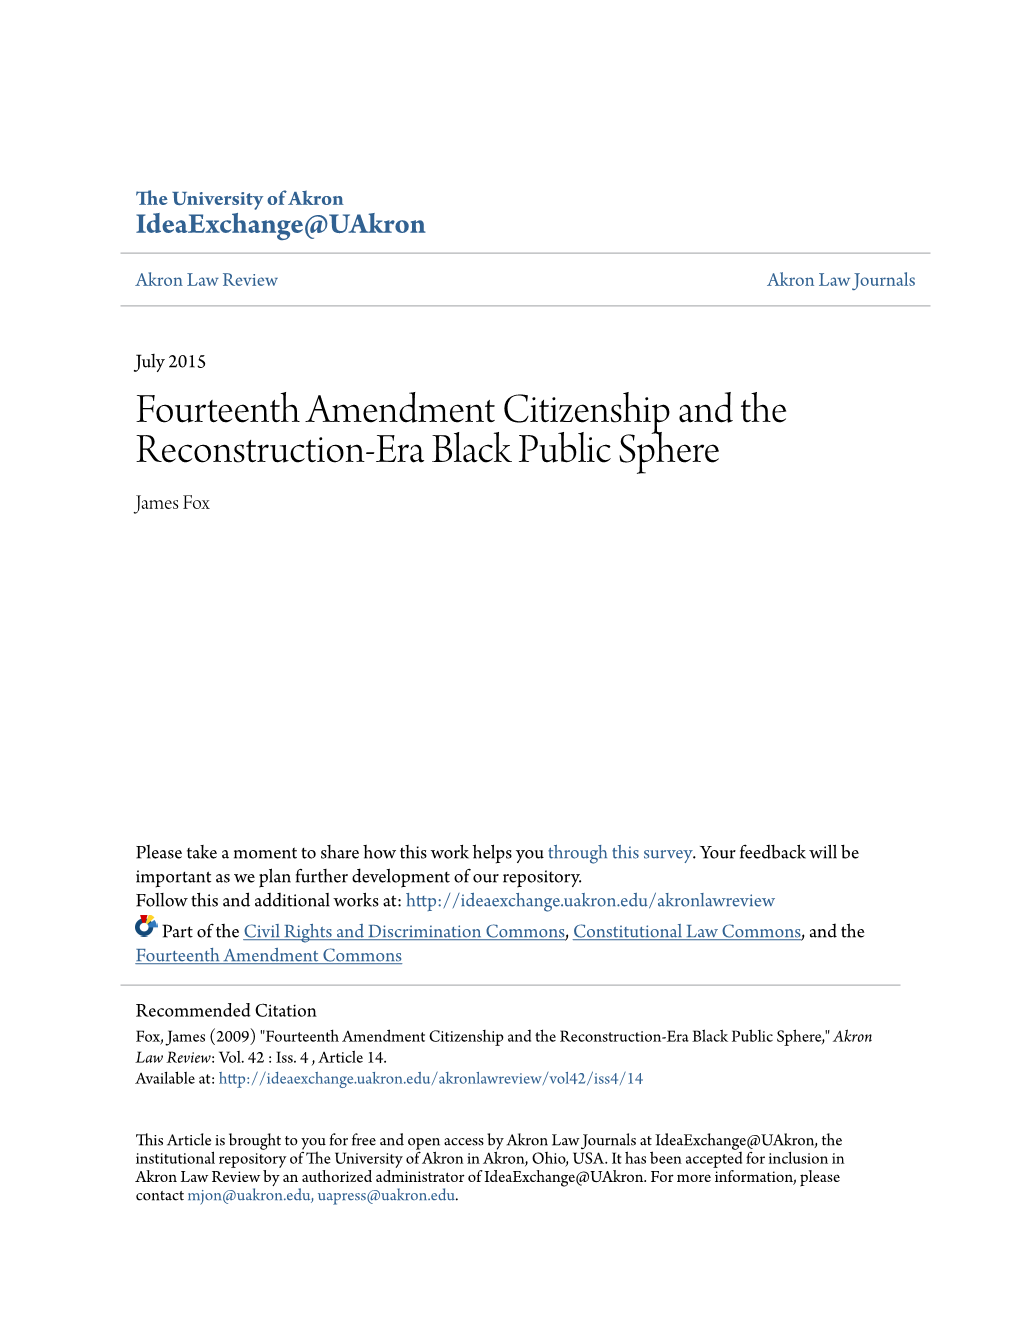 Fourteenth Amendment Citizenship and the Reconstruction-Era Black Public Sphere James Fox